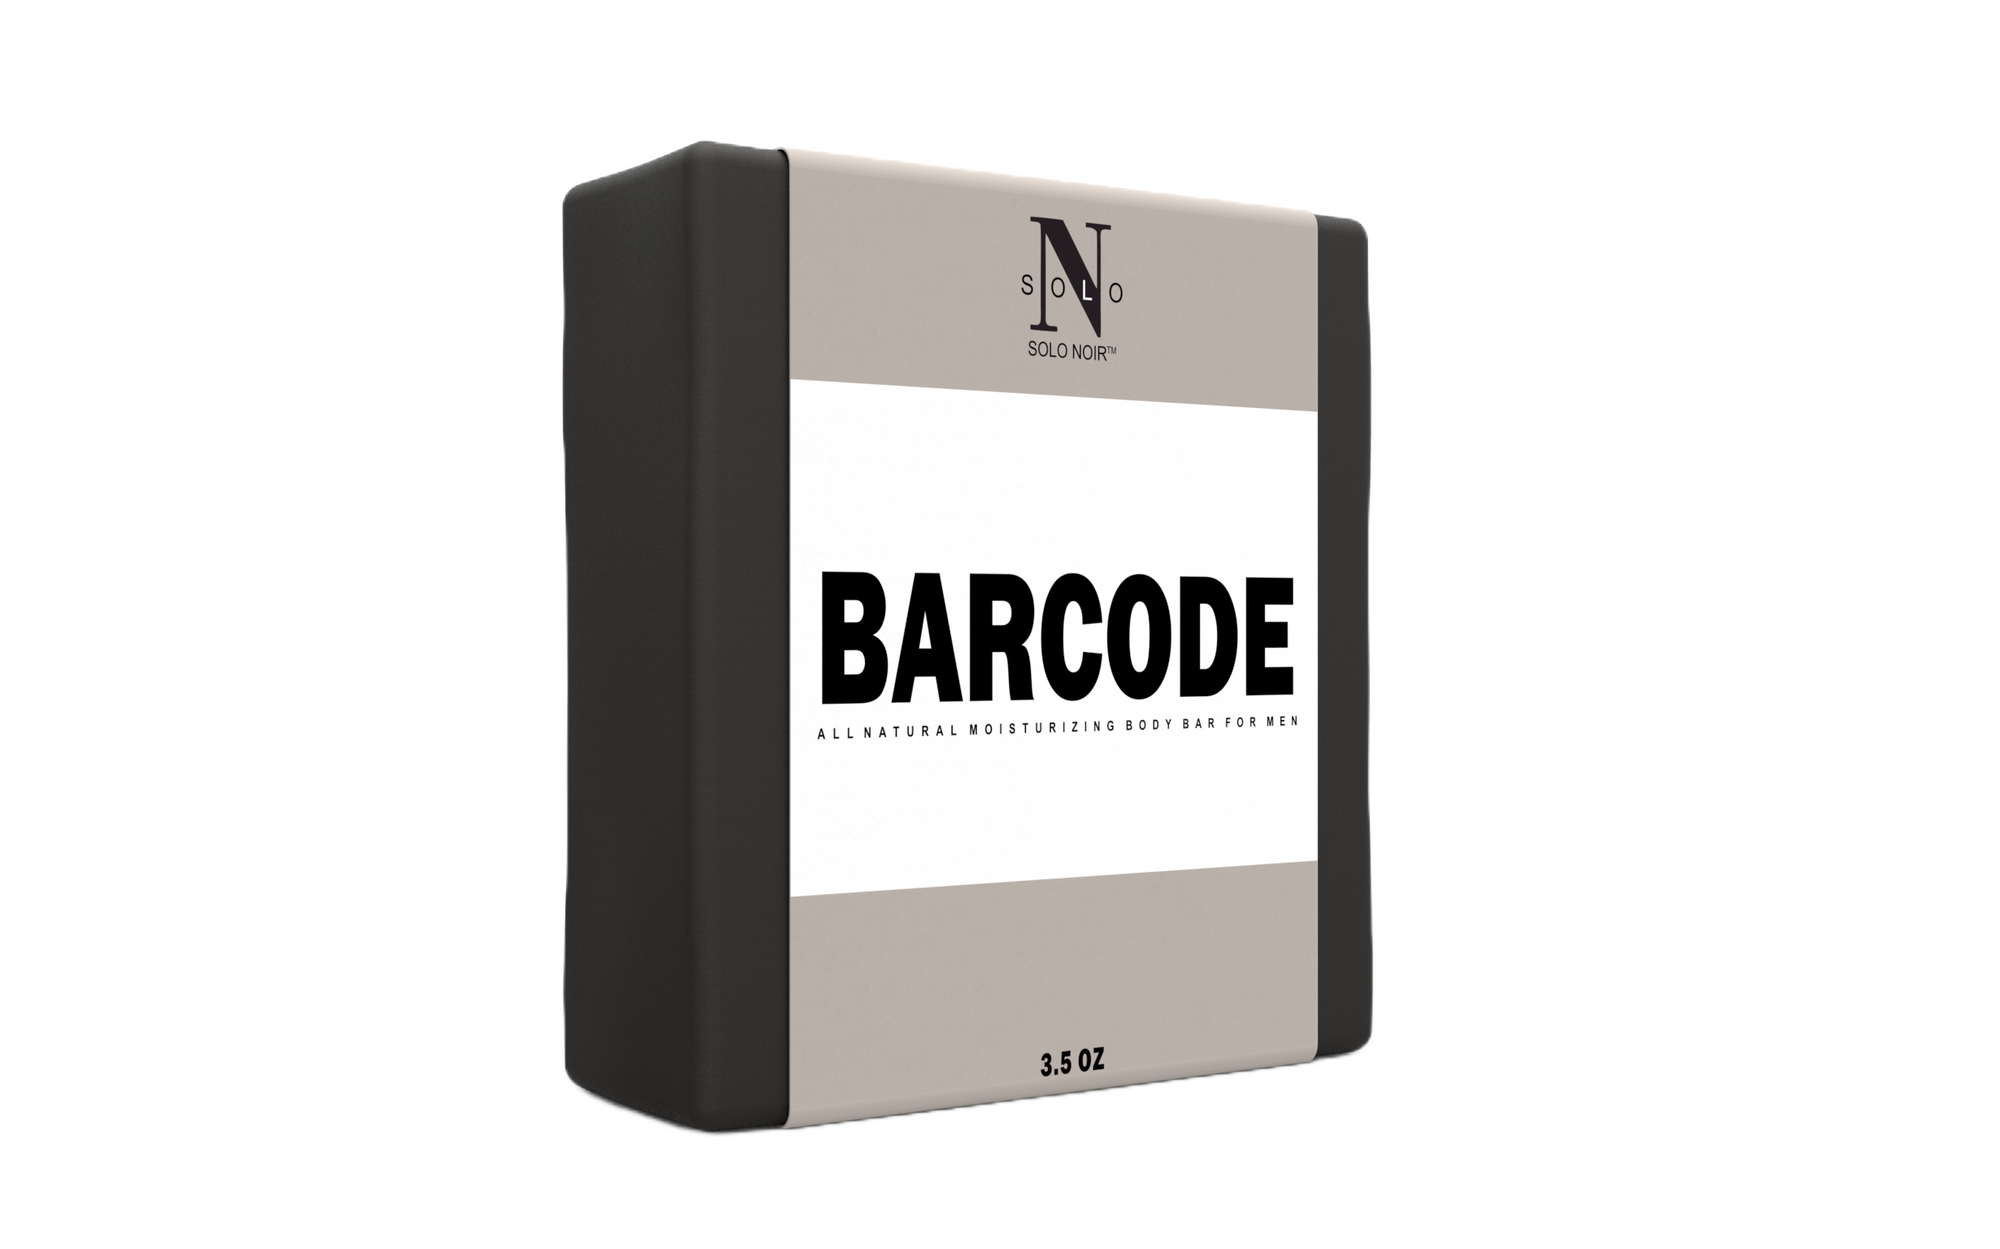 Solo Noir “BARCODE™” Moisturizing Bar 4oz